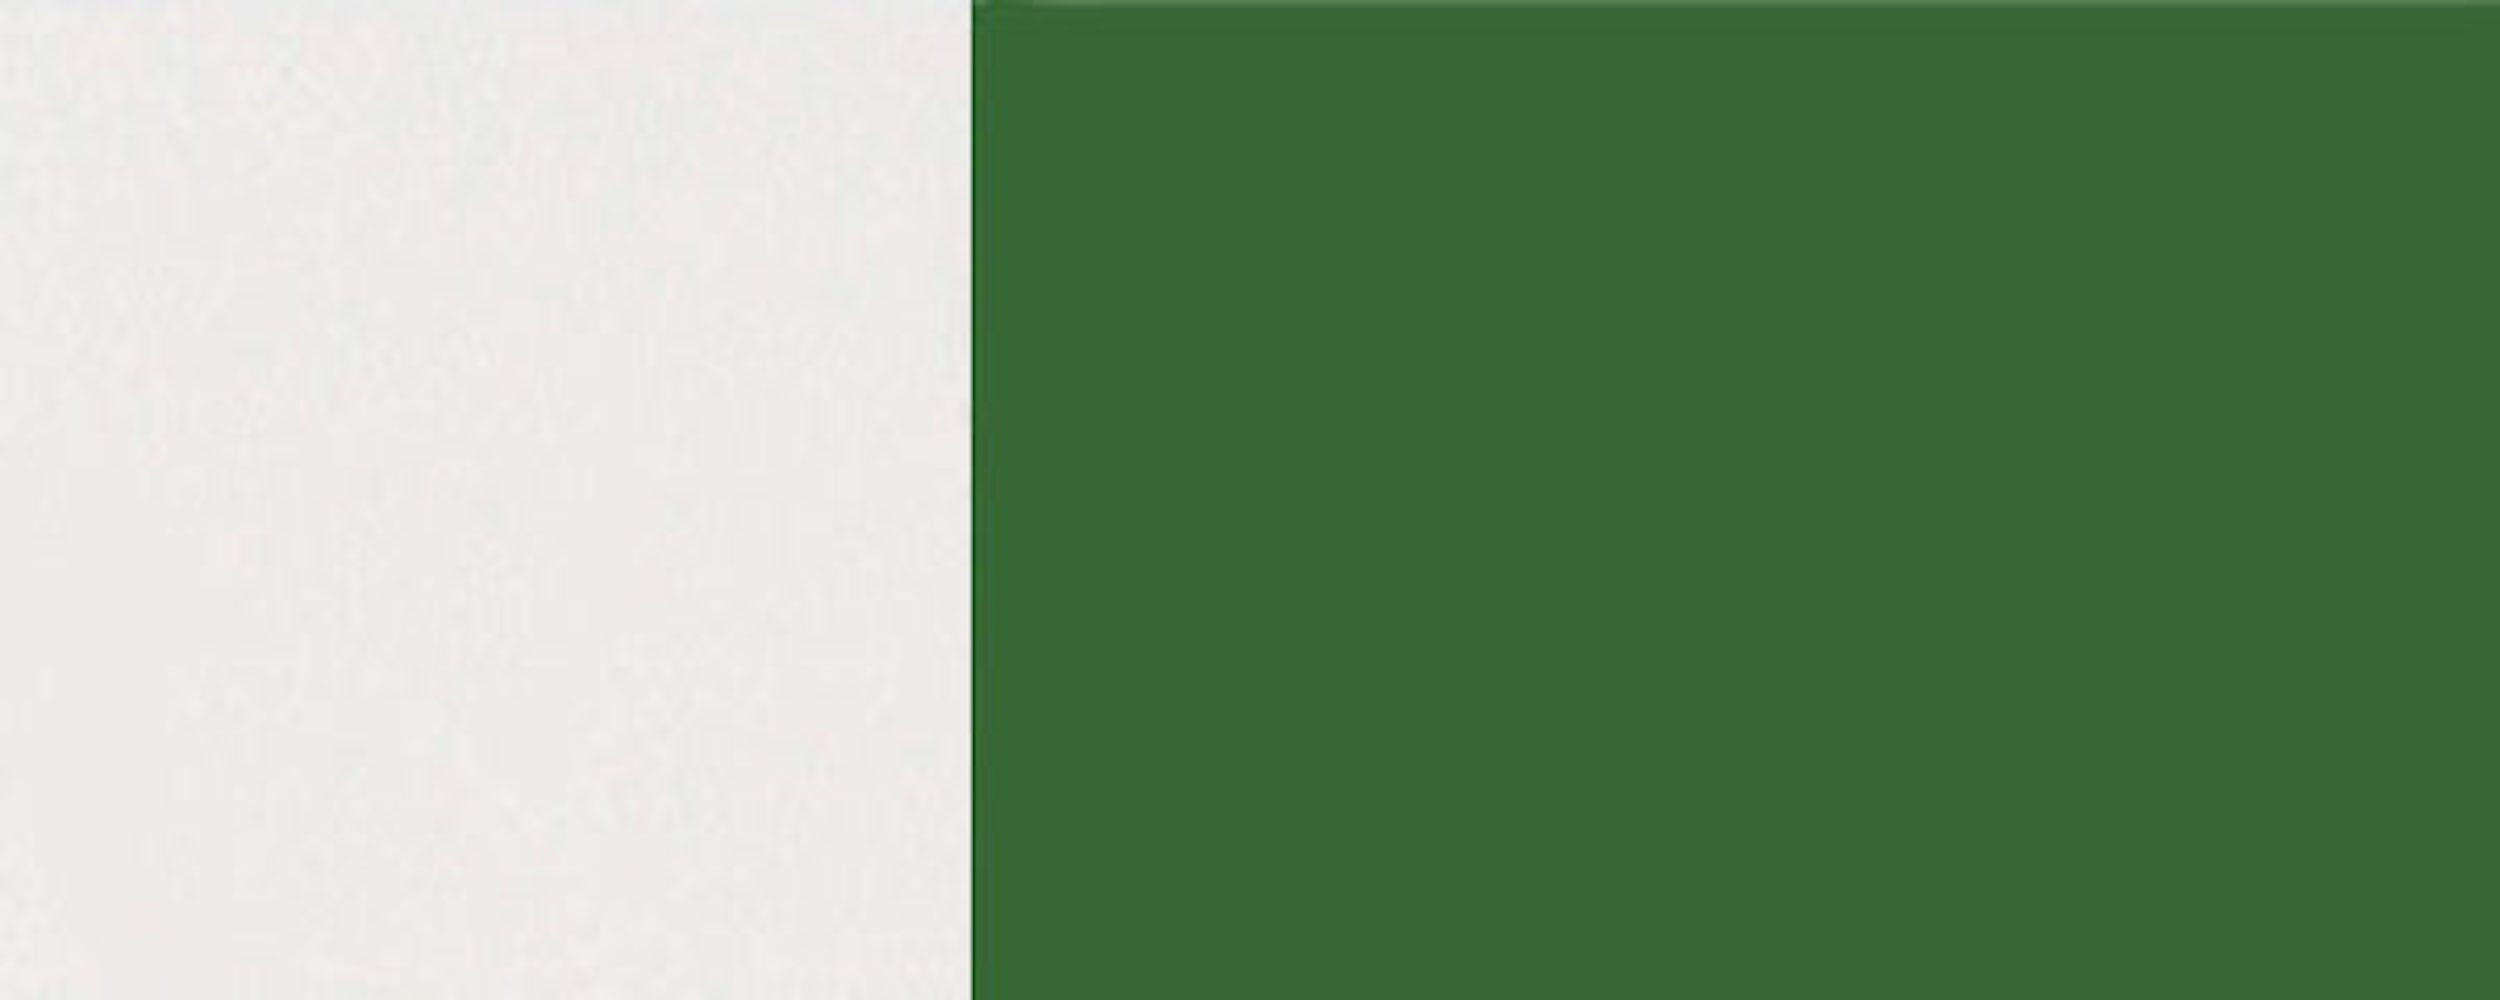 50cm Feldmann-Wohnen und RAL Ausführung Hochglanz 1-türig smaragdgrün Korpusfarbe 6001 grifflos Front-, Florence (Florence) wählbar Glashängeschrank